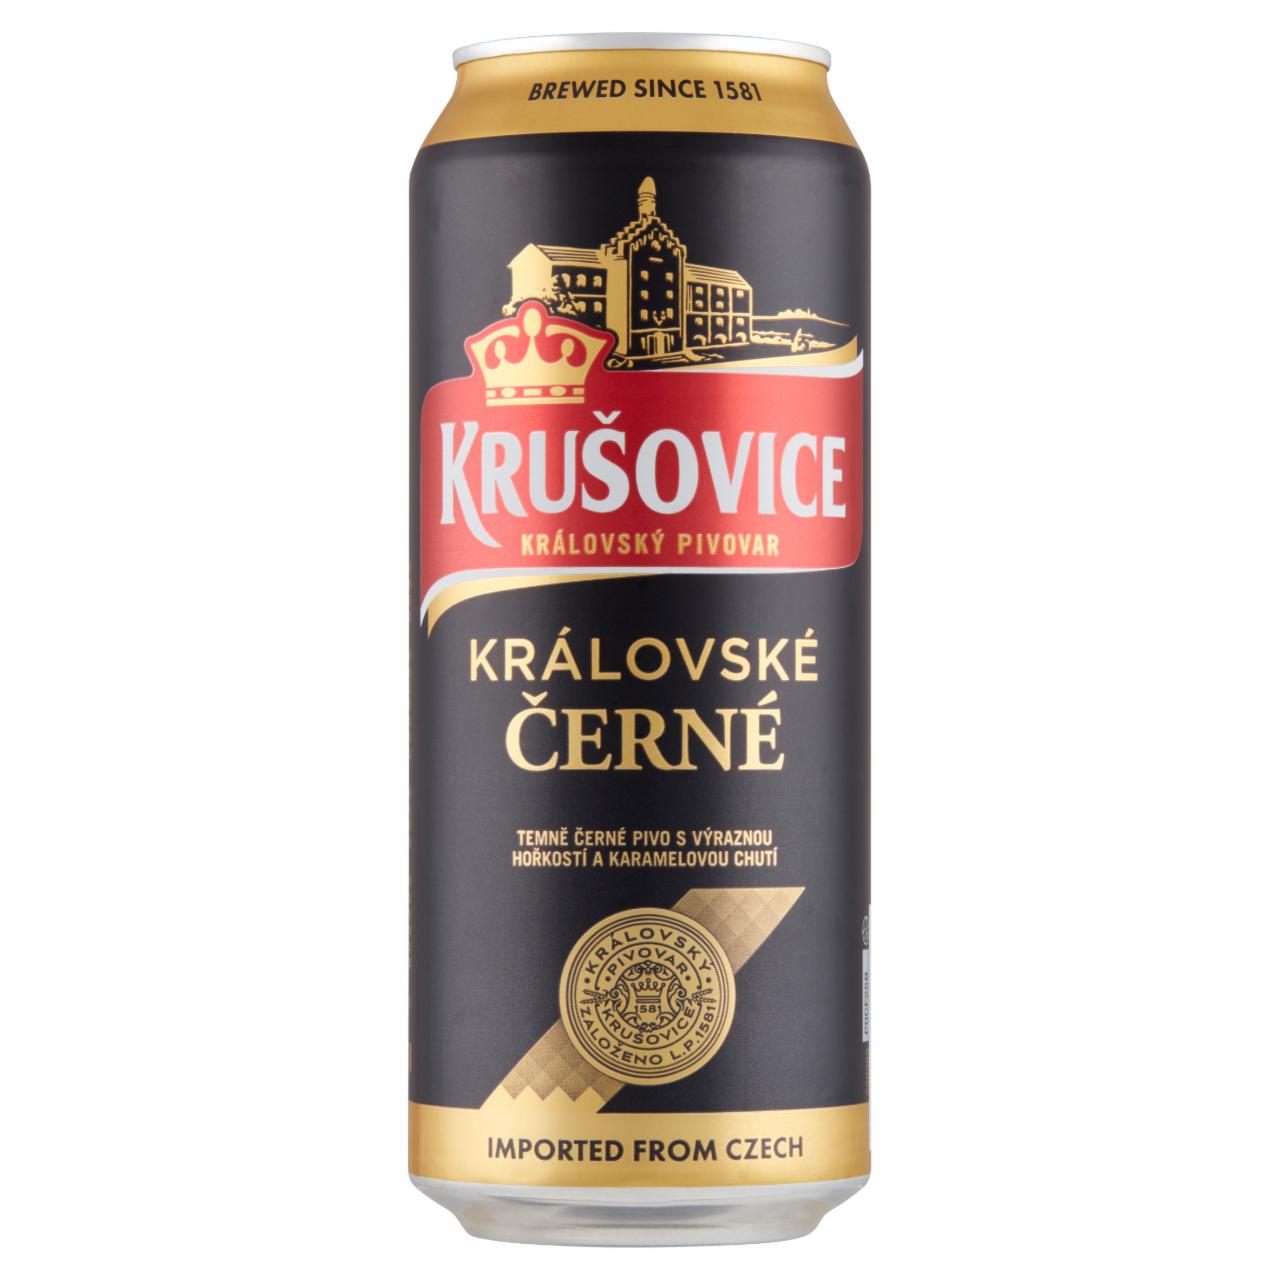 Képek - Krušovice Černé eredeti cseh import barna sör 3,8% 0,5 l doboz